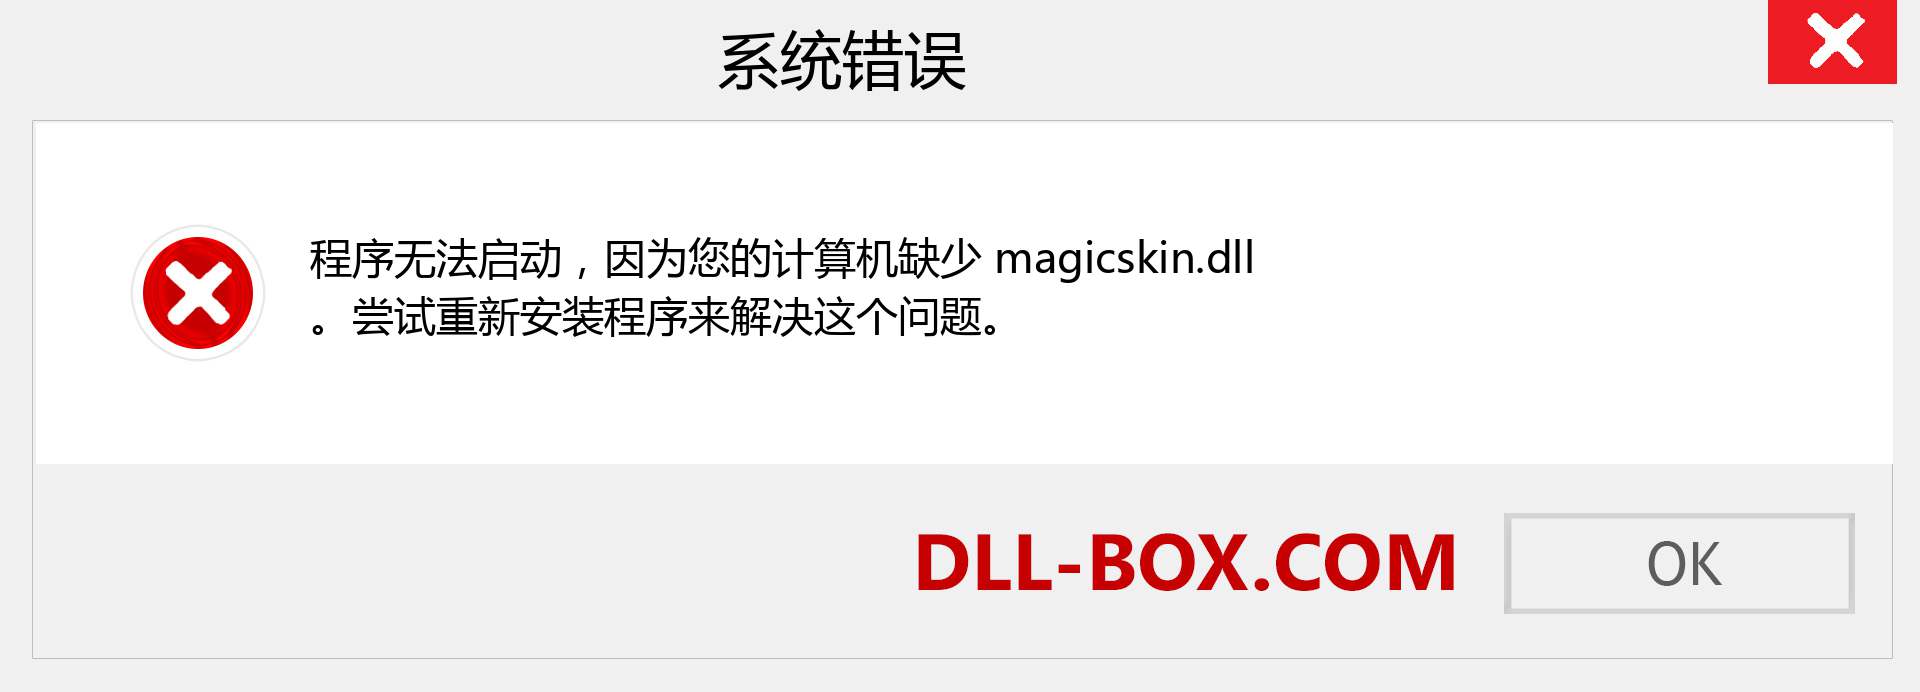 magicskin.dll 文件丢失？。 适用于 Windows 7、8、10 的下载 - 修复 Windows、照片、图像上的 magicskin dll 丢失错误